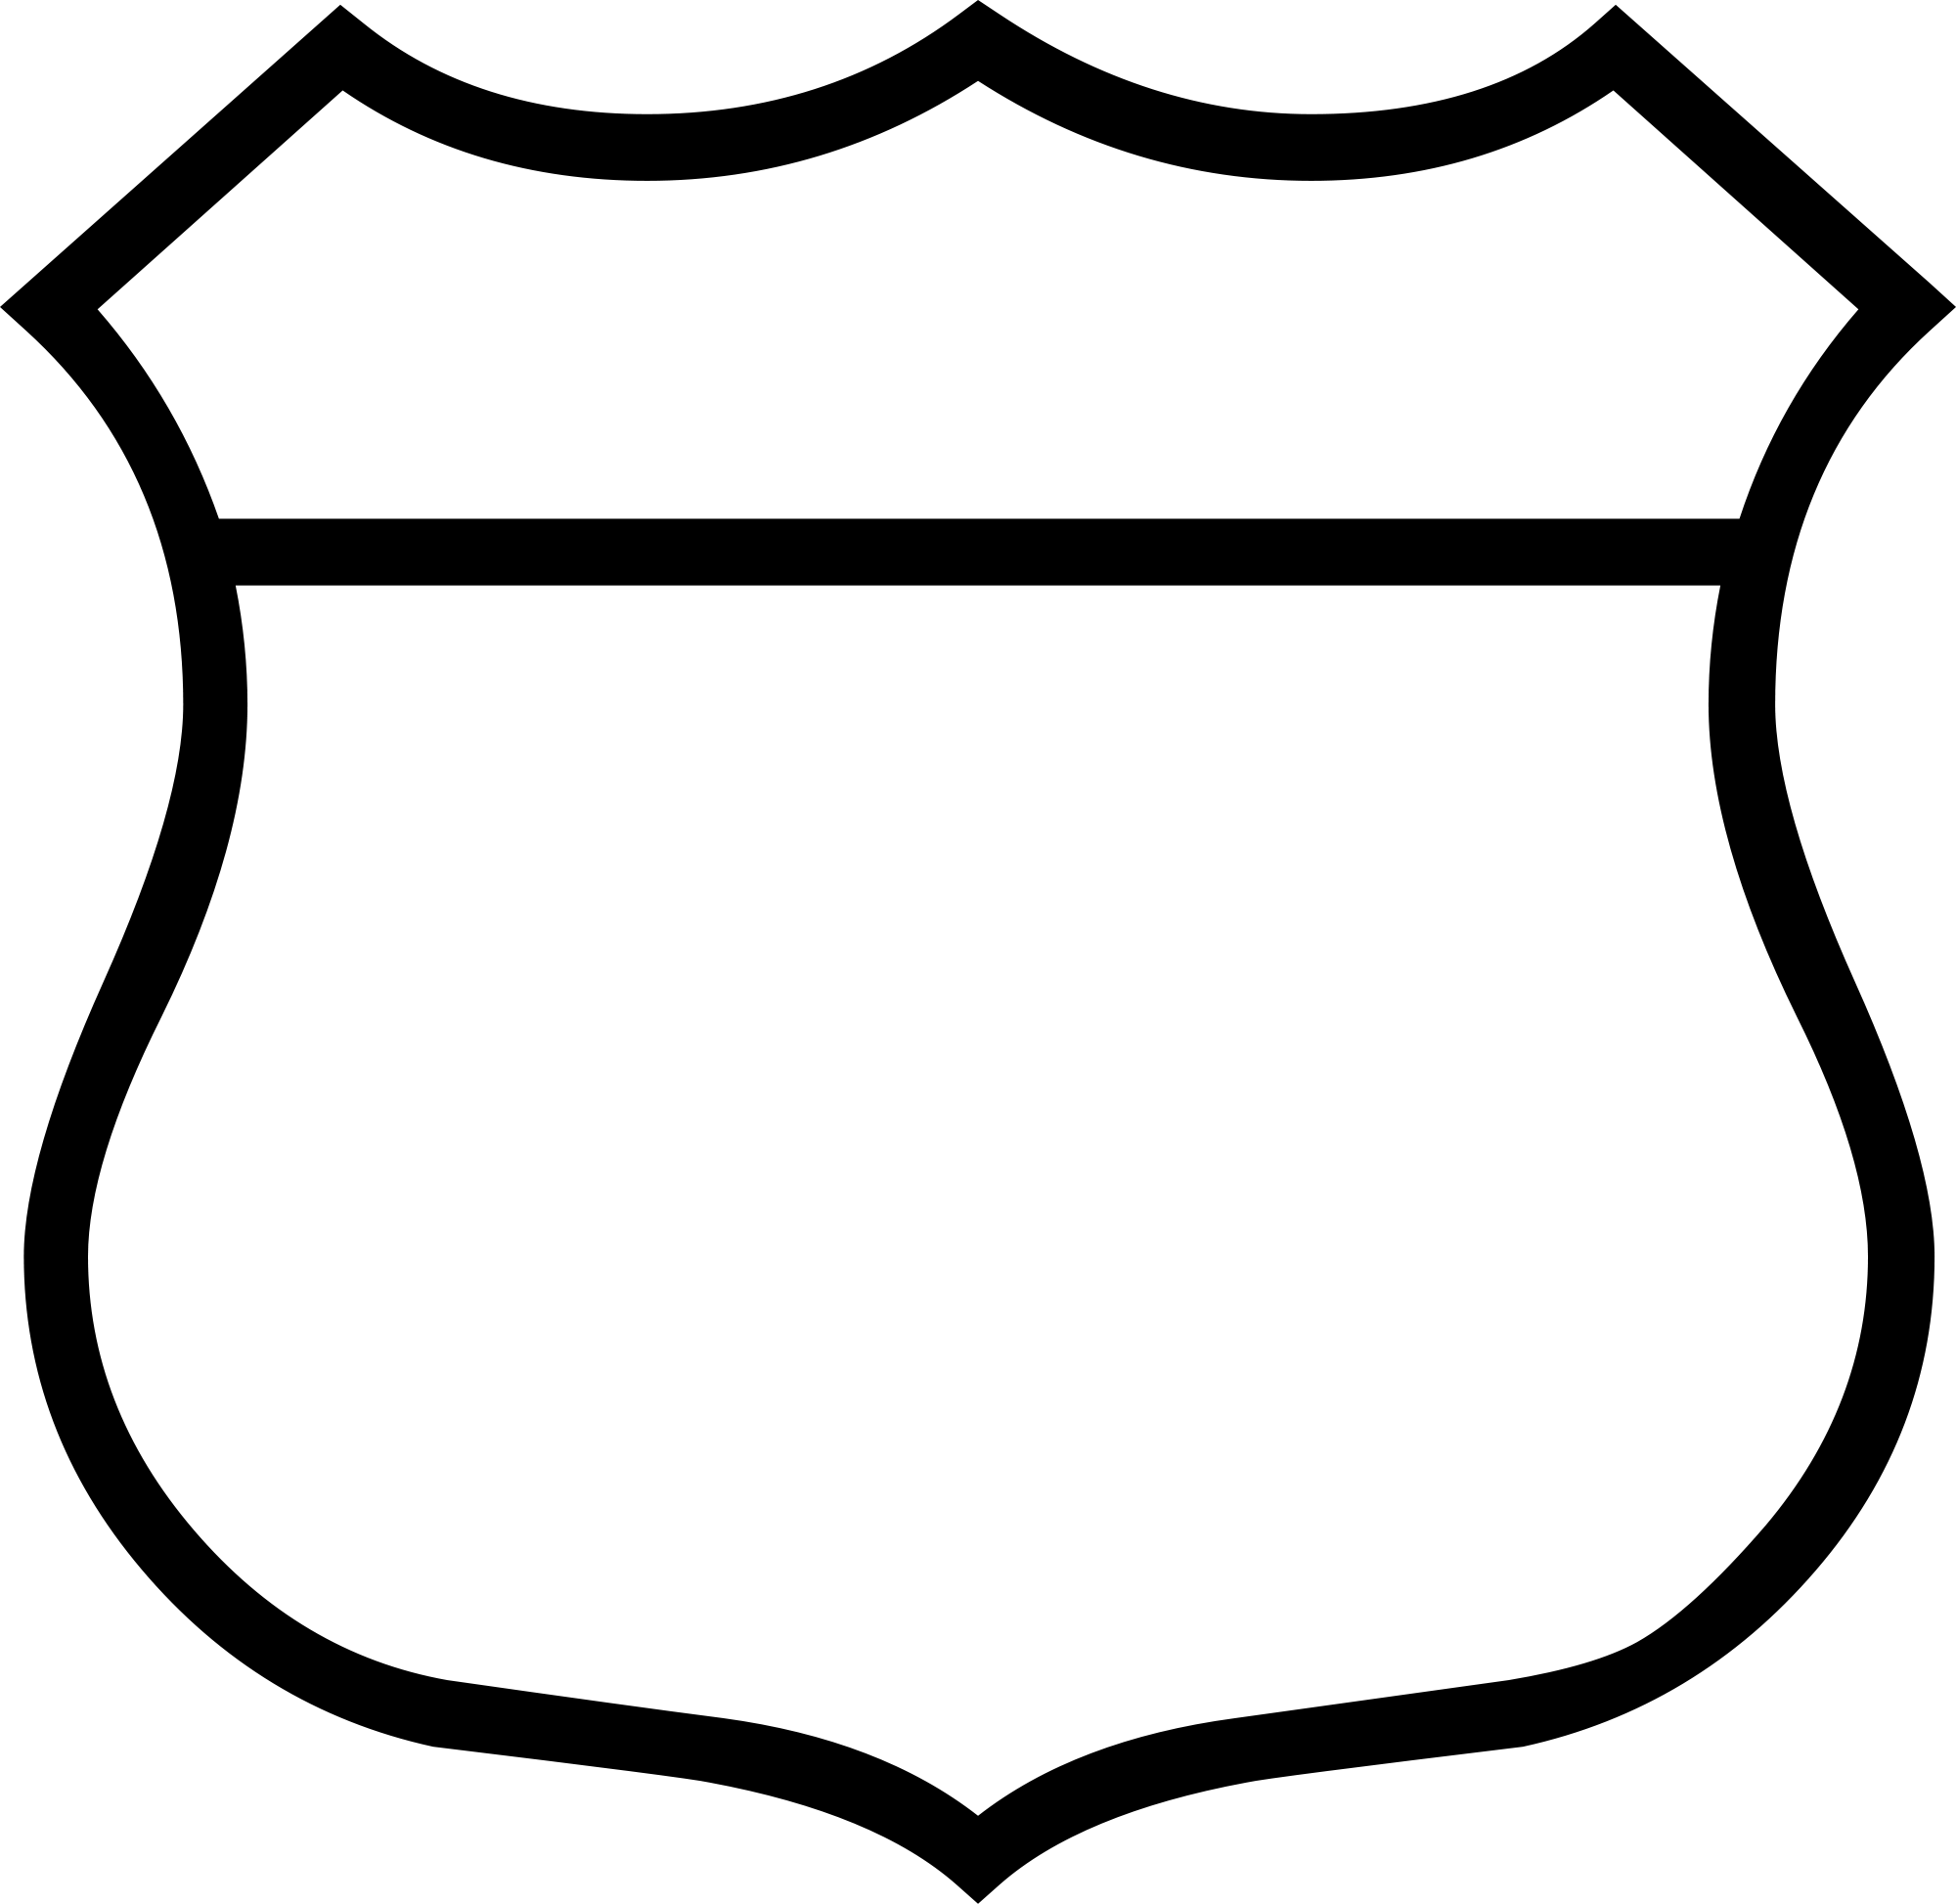 File:Blank shield.svg - Wikimedia Commons